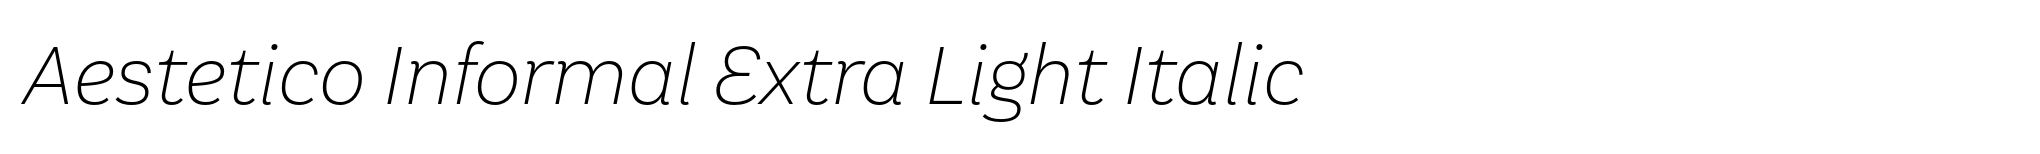 Aestetico Informal Extra Light Italic image